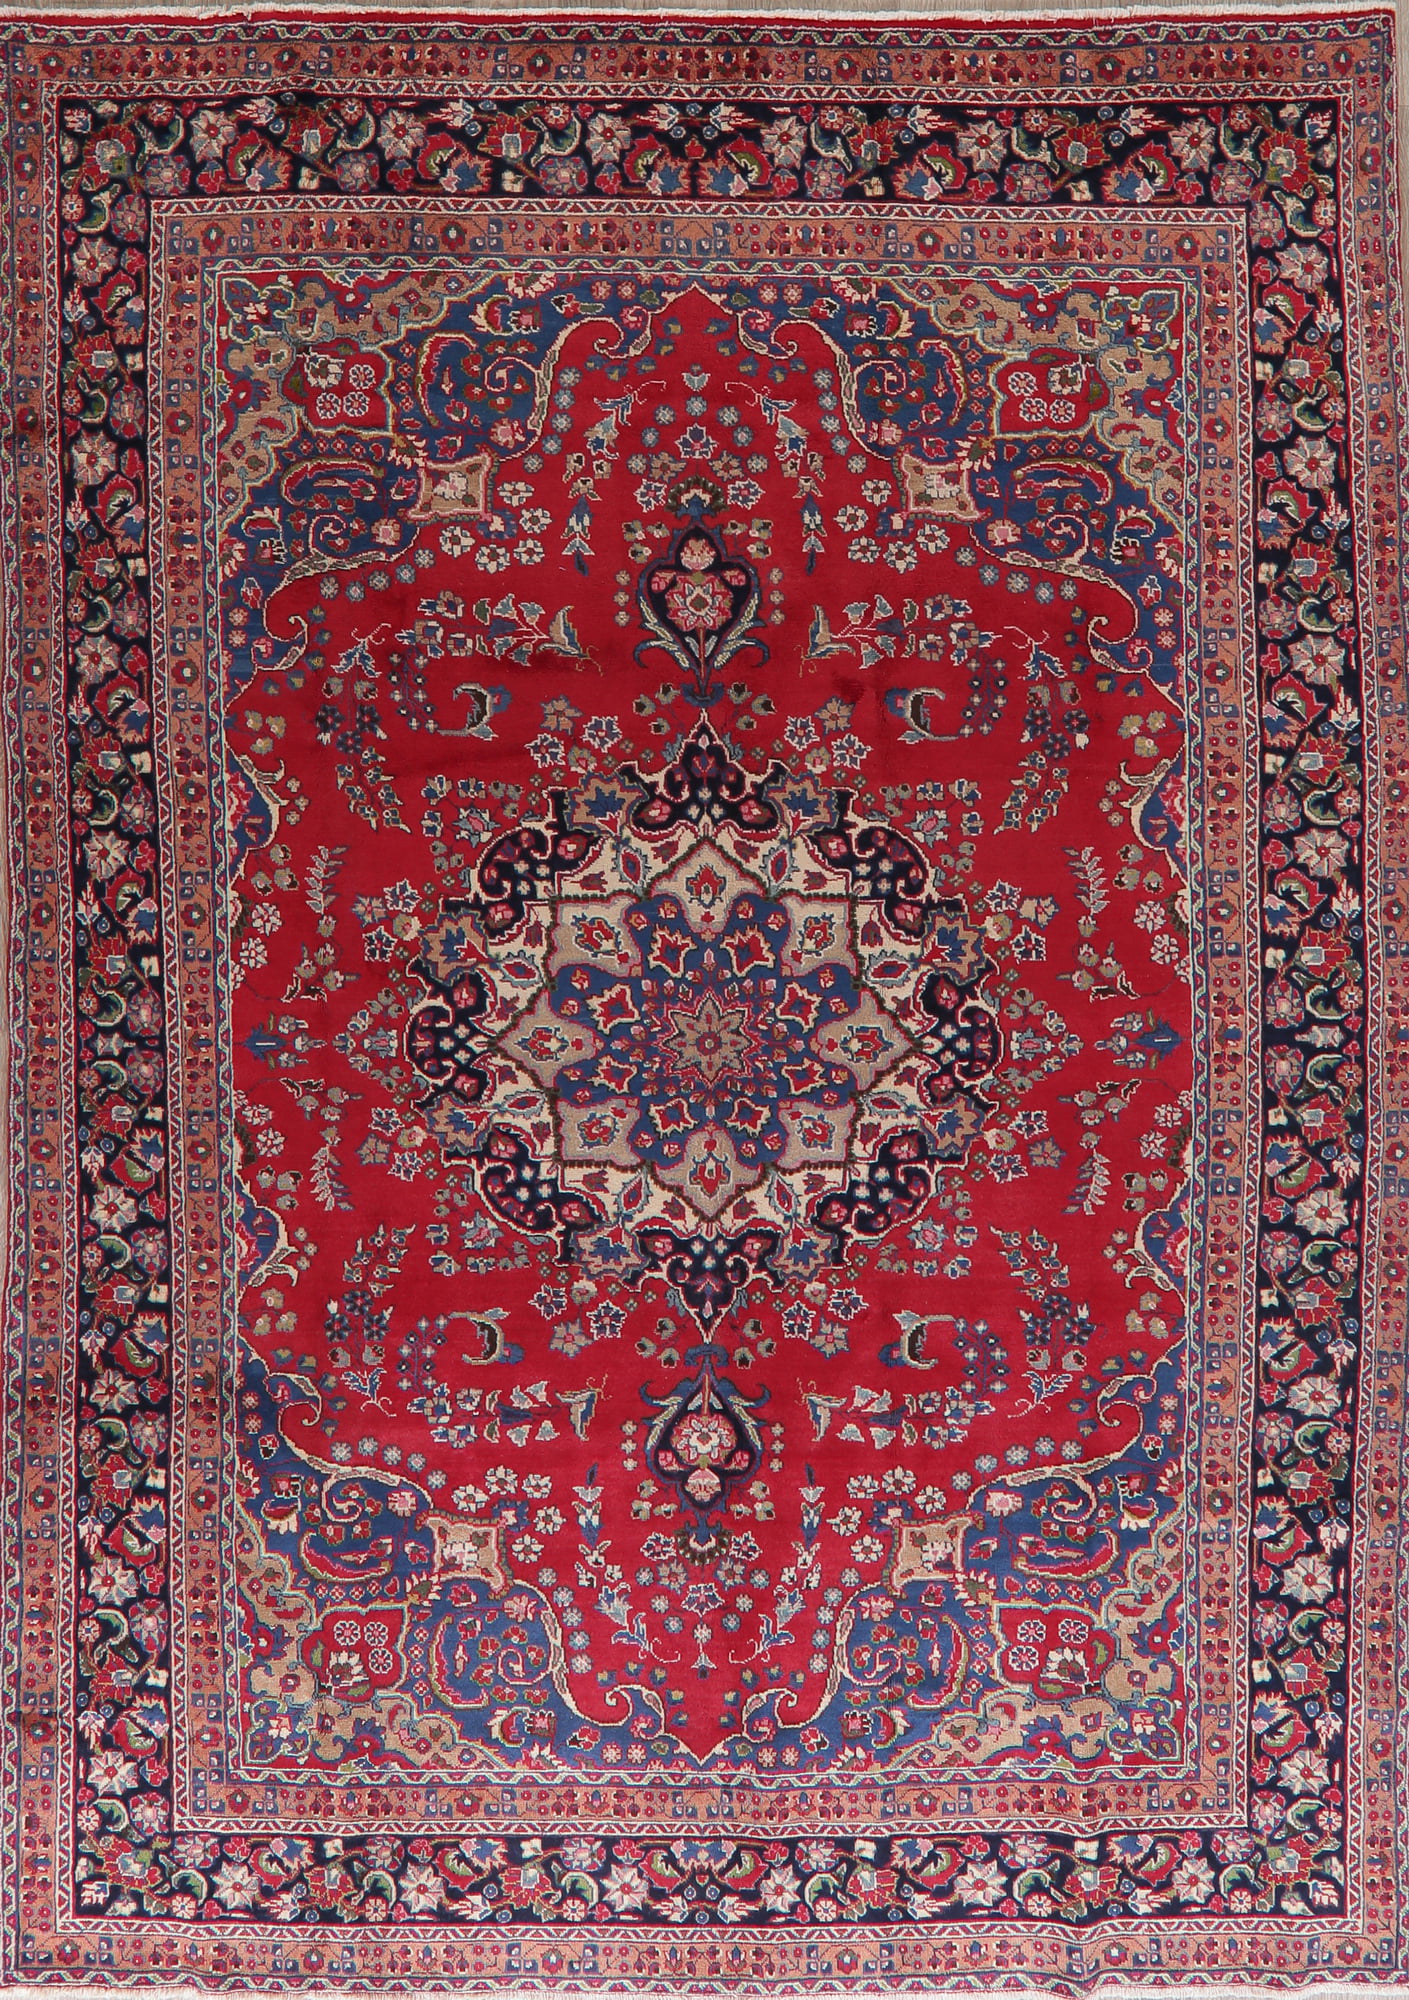 Black Friday Deal Red Floral Medallion Mashad Oriental Hand Knotted Wool Area Rug Living Room Carpet 8x11 Walmart Com Walmart Com